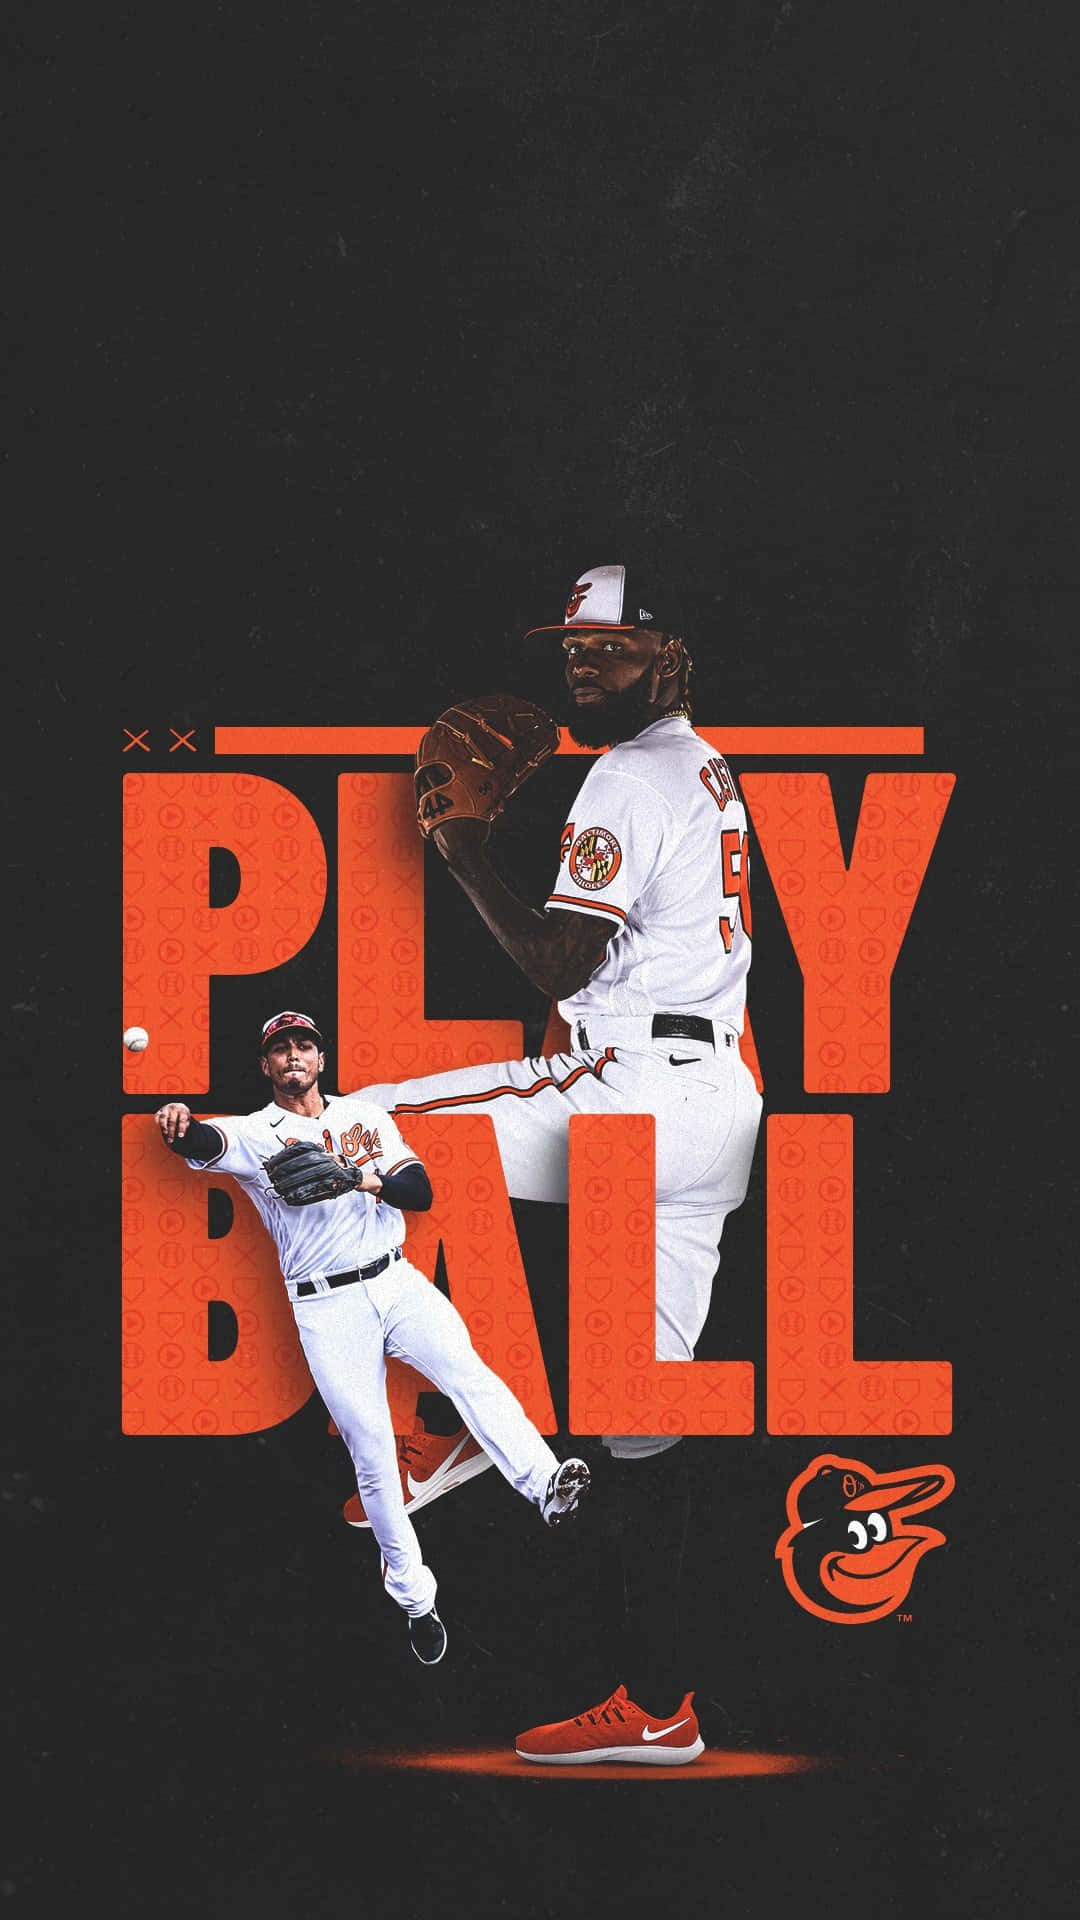 MLB Baseball League in Action Wallpaper